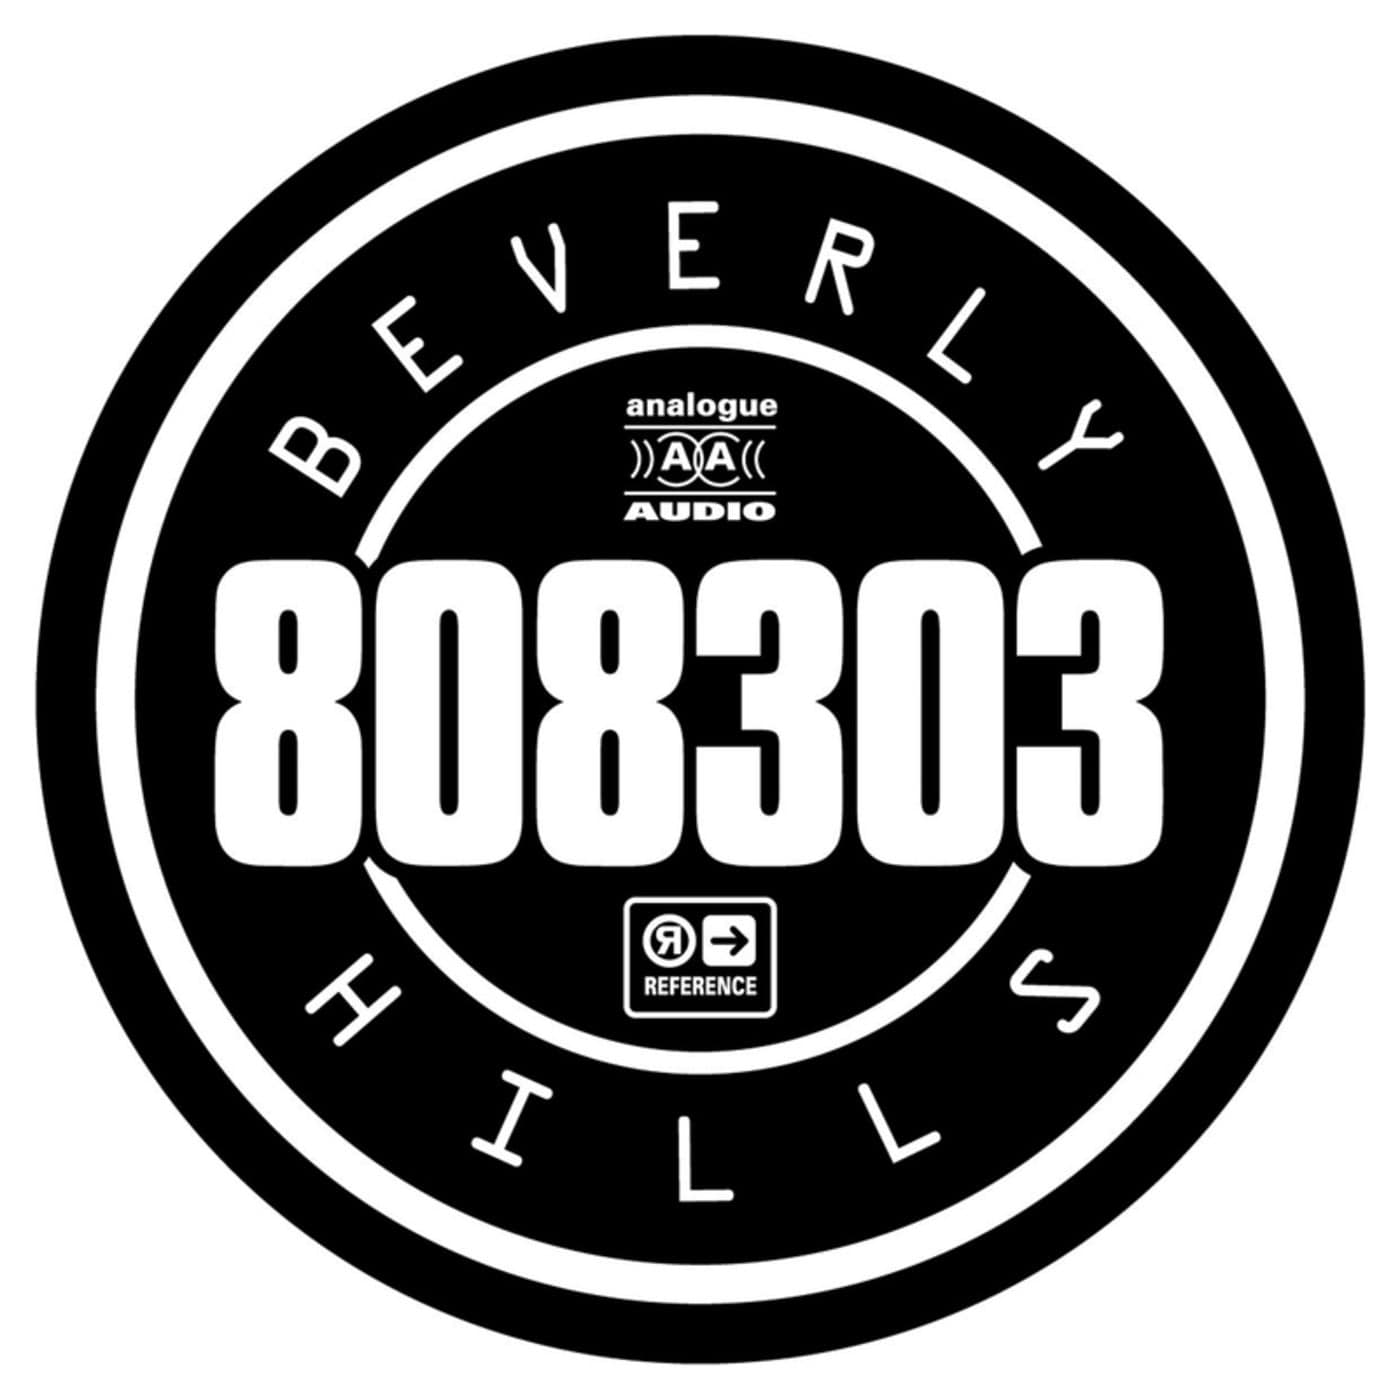 Download Beverly Hills 808303 - Beverly Hills 808303 Acid Smack on Electrobuzz